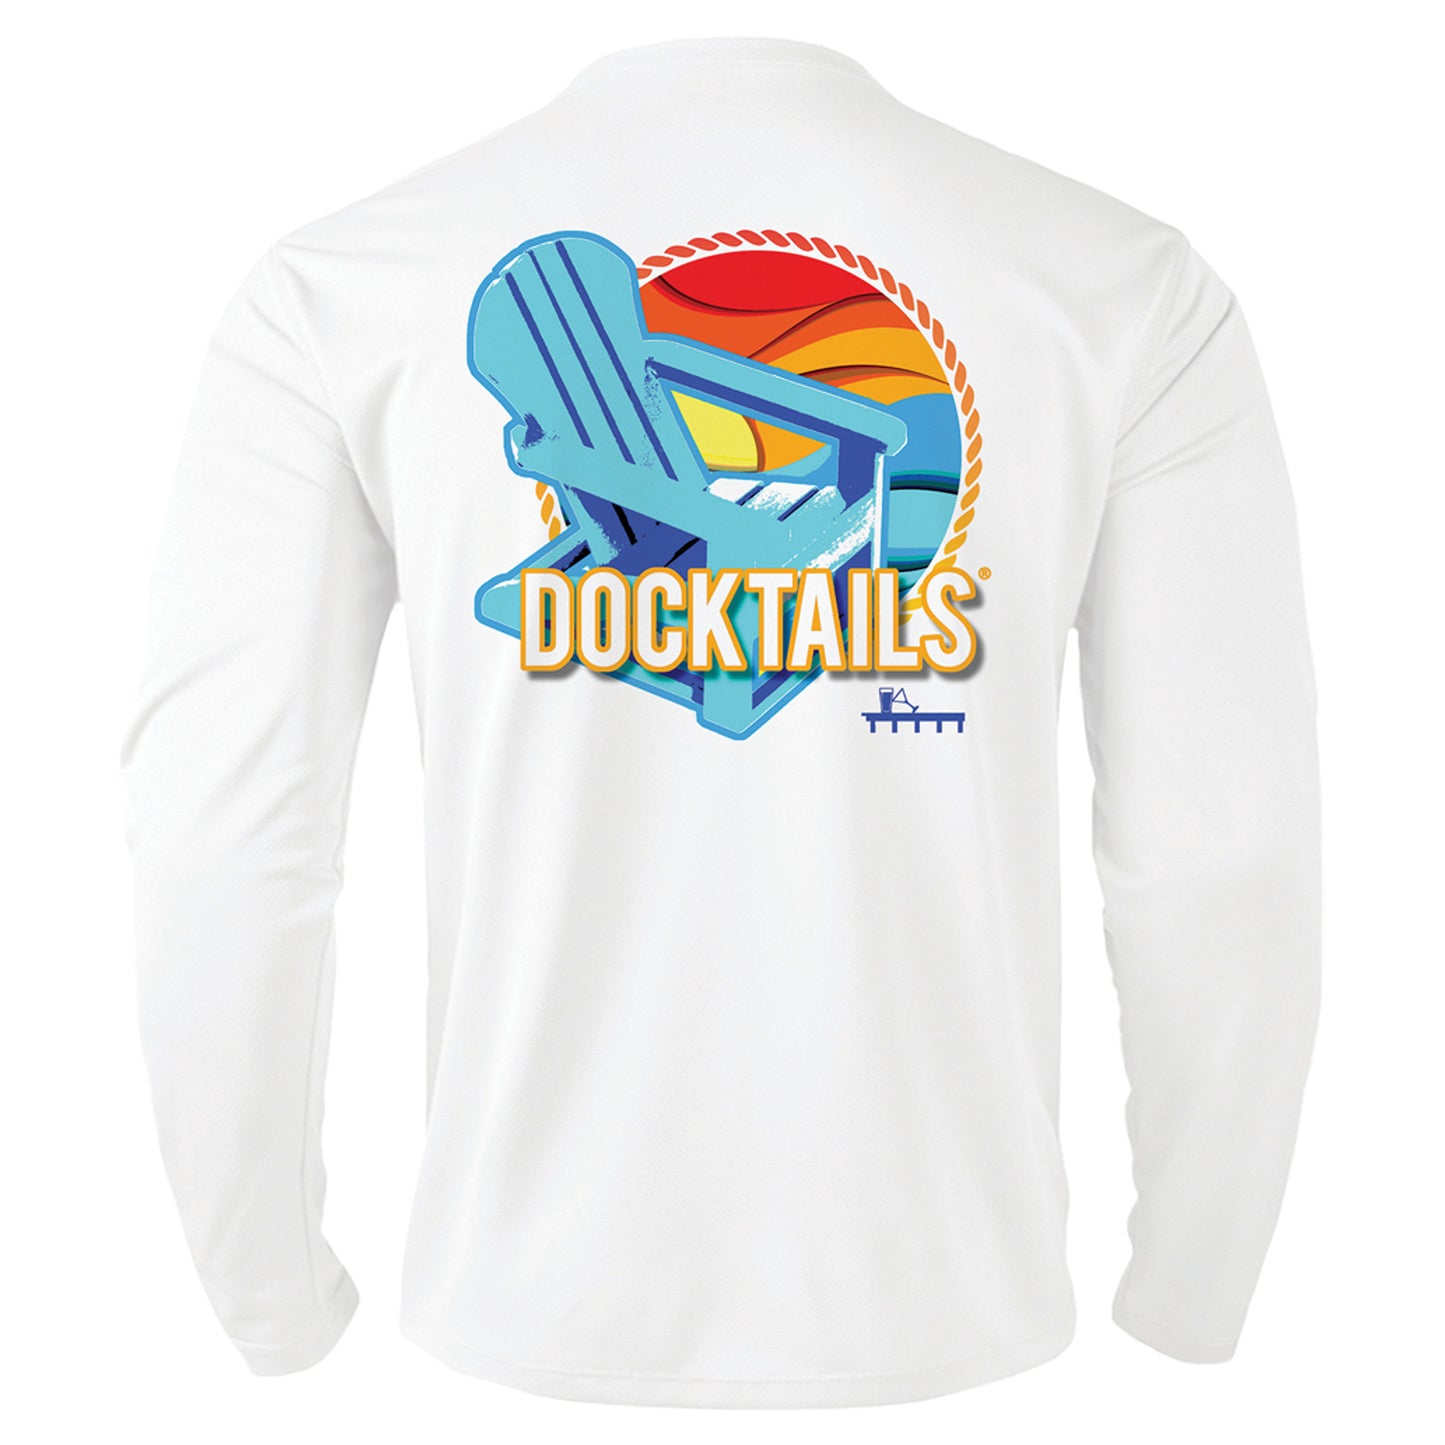 Docktails Adirondack logo men's sun shirt in white UPF 50 protection fabric back of shirt